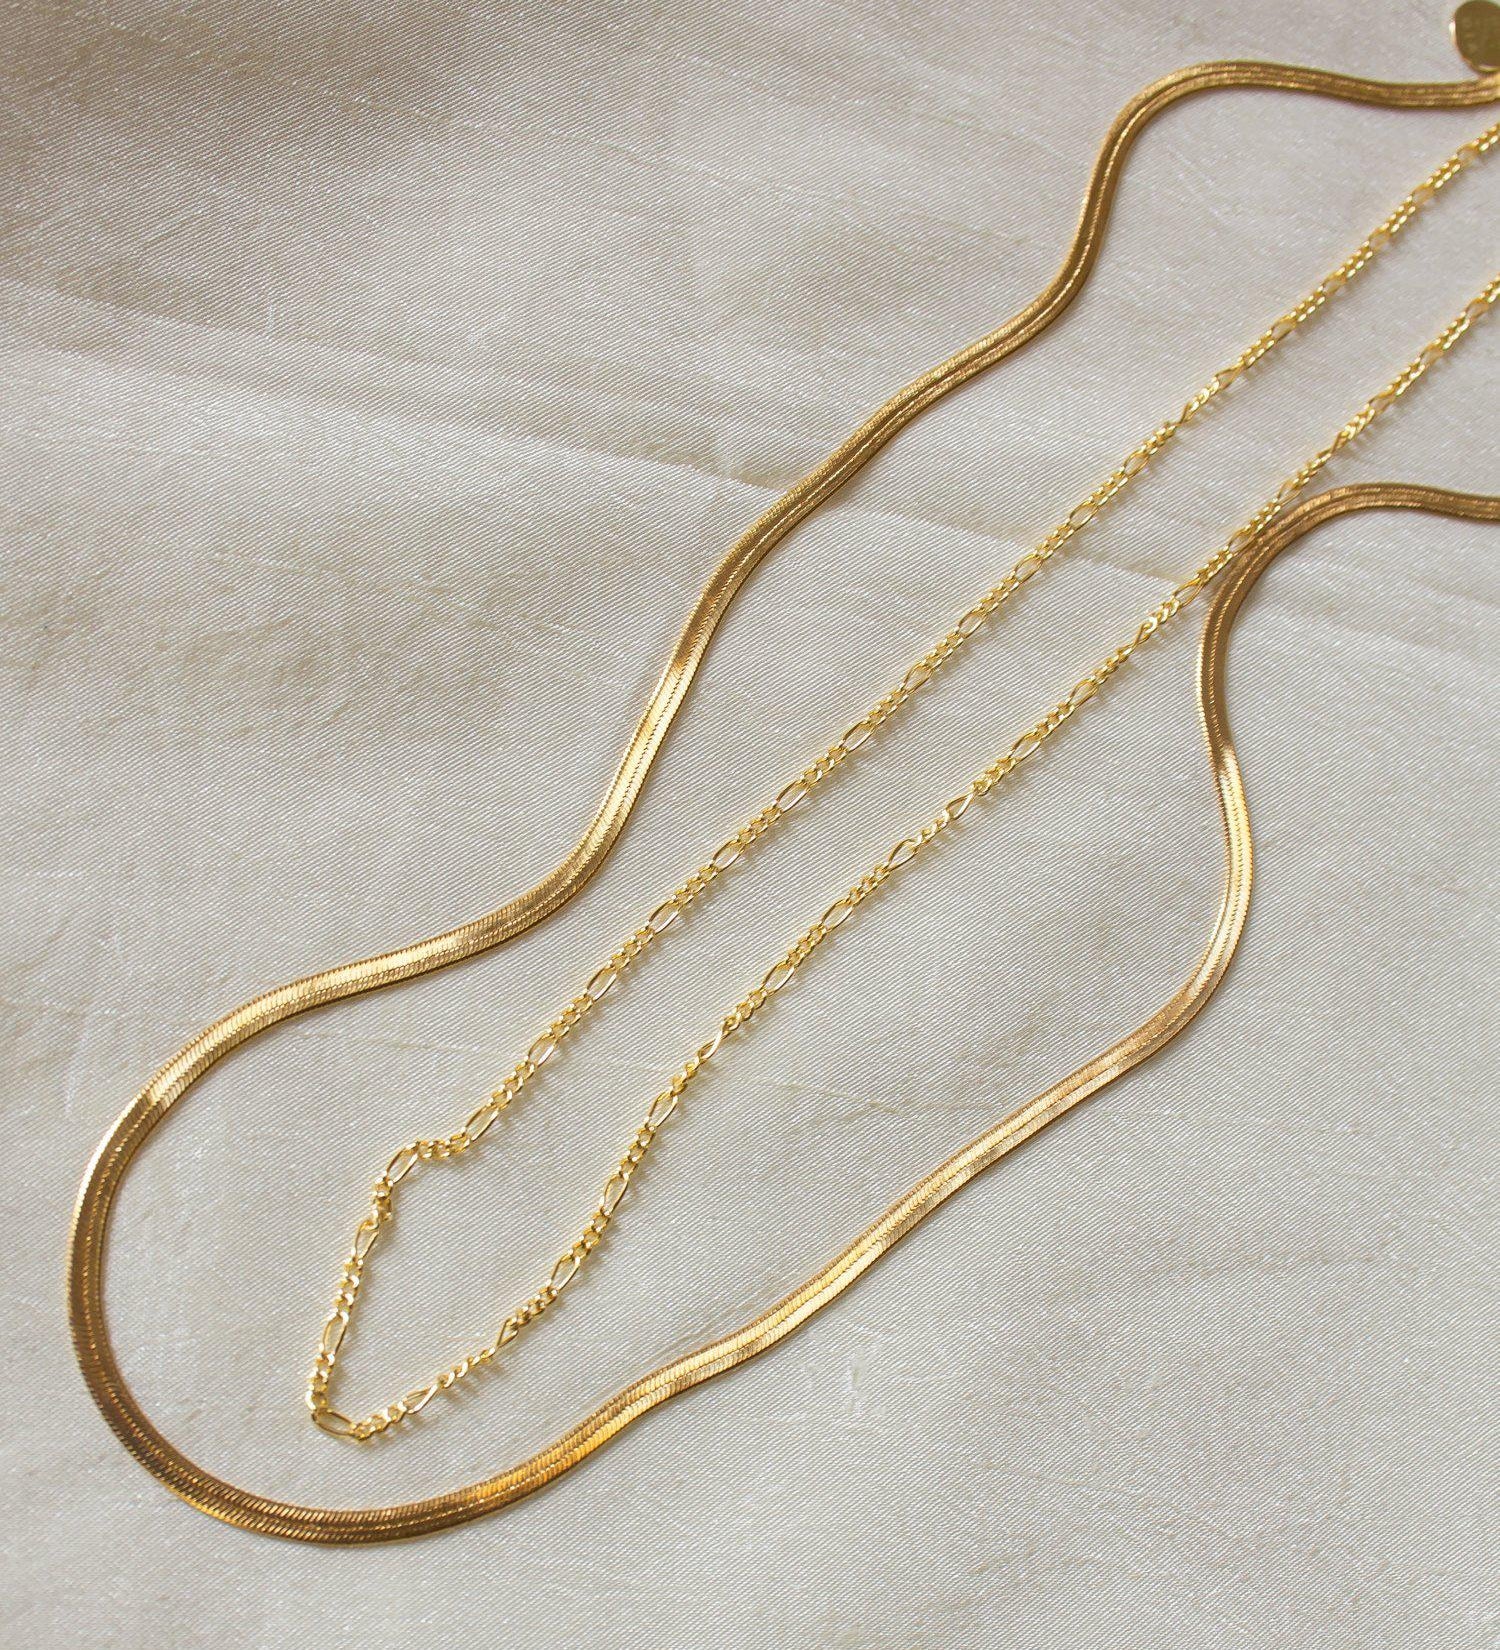 Gold Herringbone and Thin Figaro Toggle Clasp Necklace Set - Dea Dia